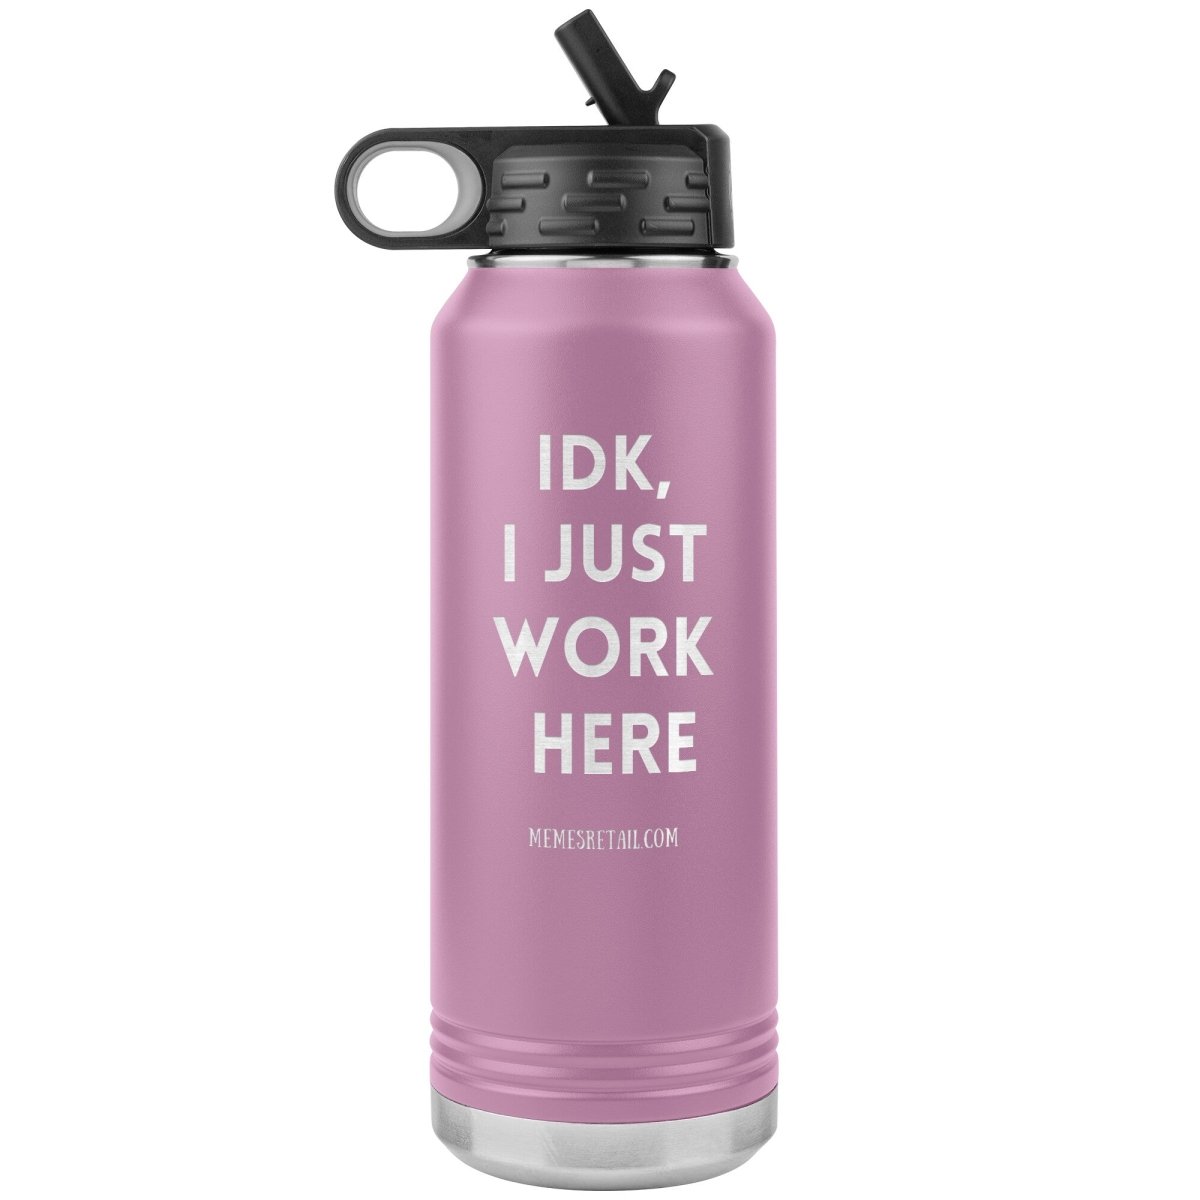 IDK, I Just Work Here 32 oz Stainless Steel Water Bottle Tumbler, Light Purple - MemesRetail.com